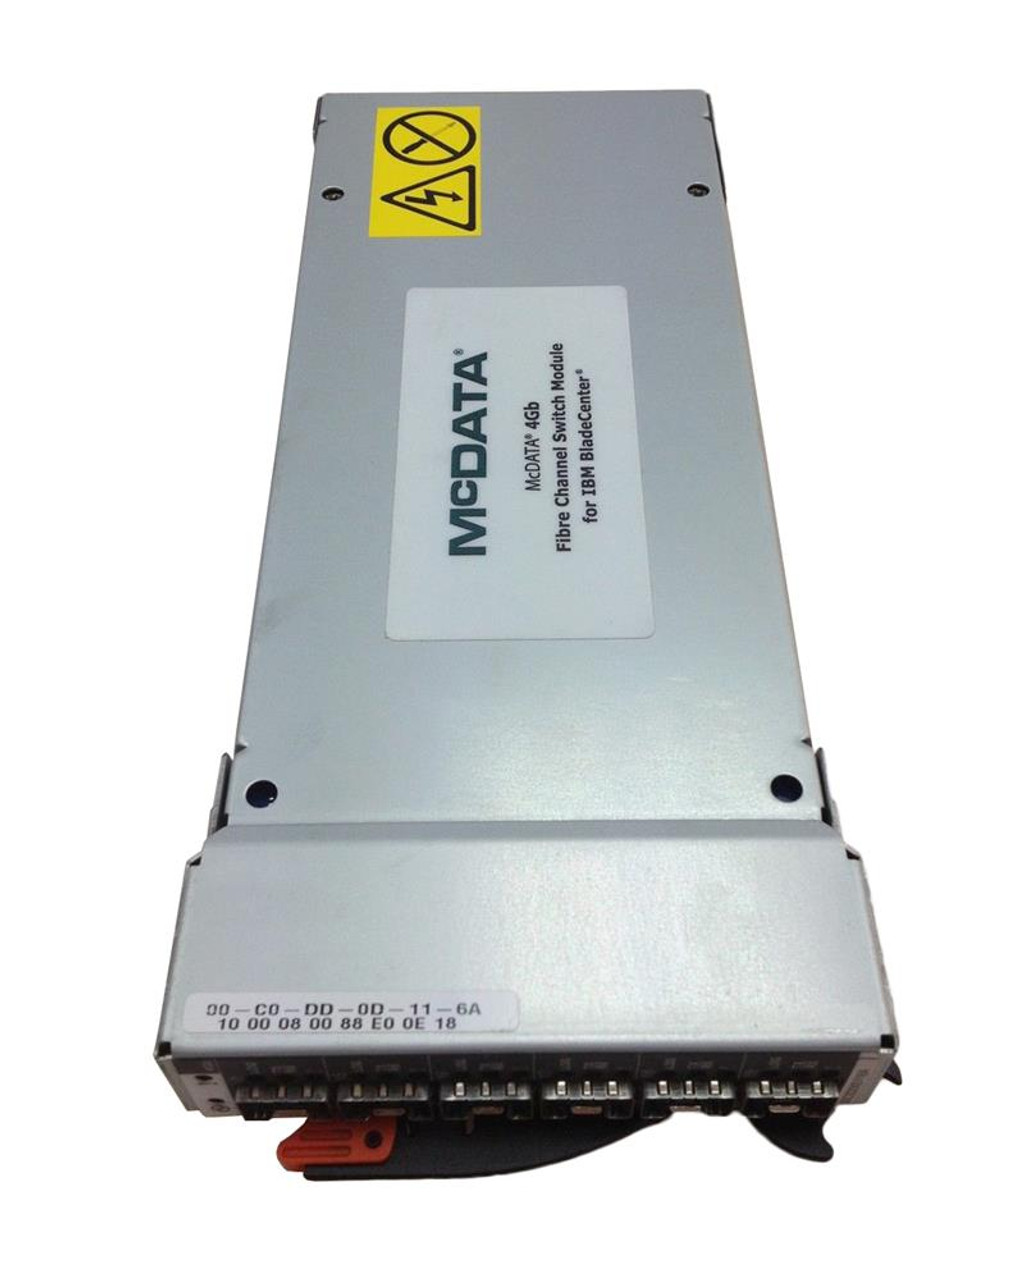 32R1905-01-CT IBM 4Gb Fibre Channel 10 Port Switch Module by McDATA for BladeCenter (Refurbished)